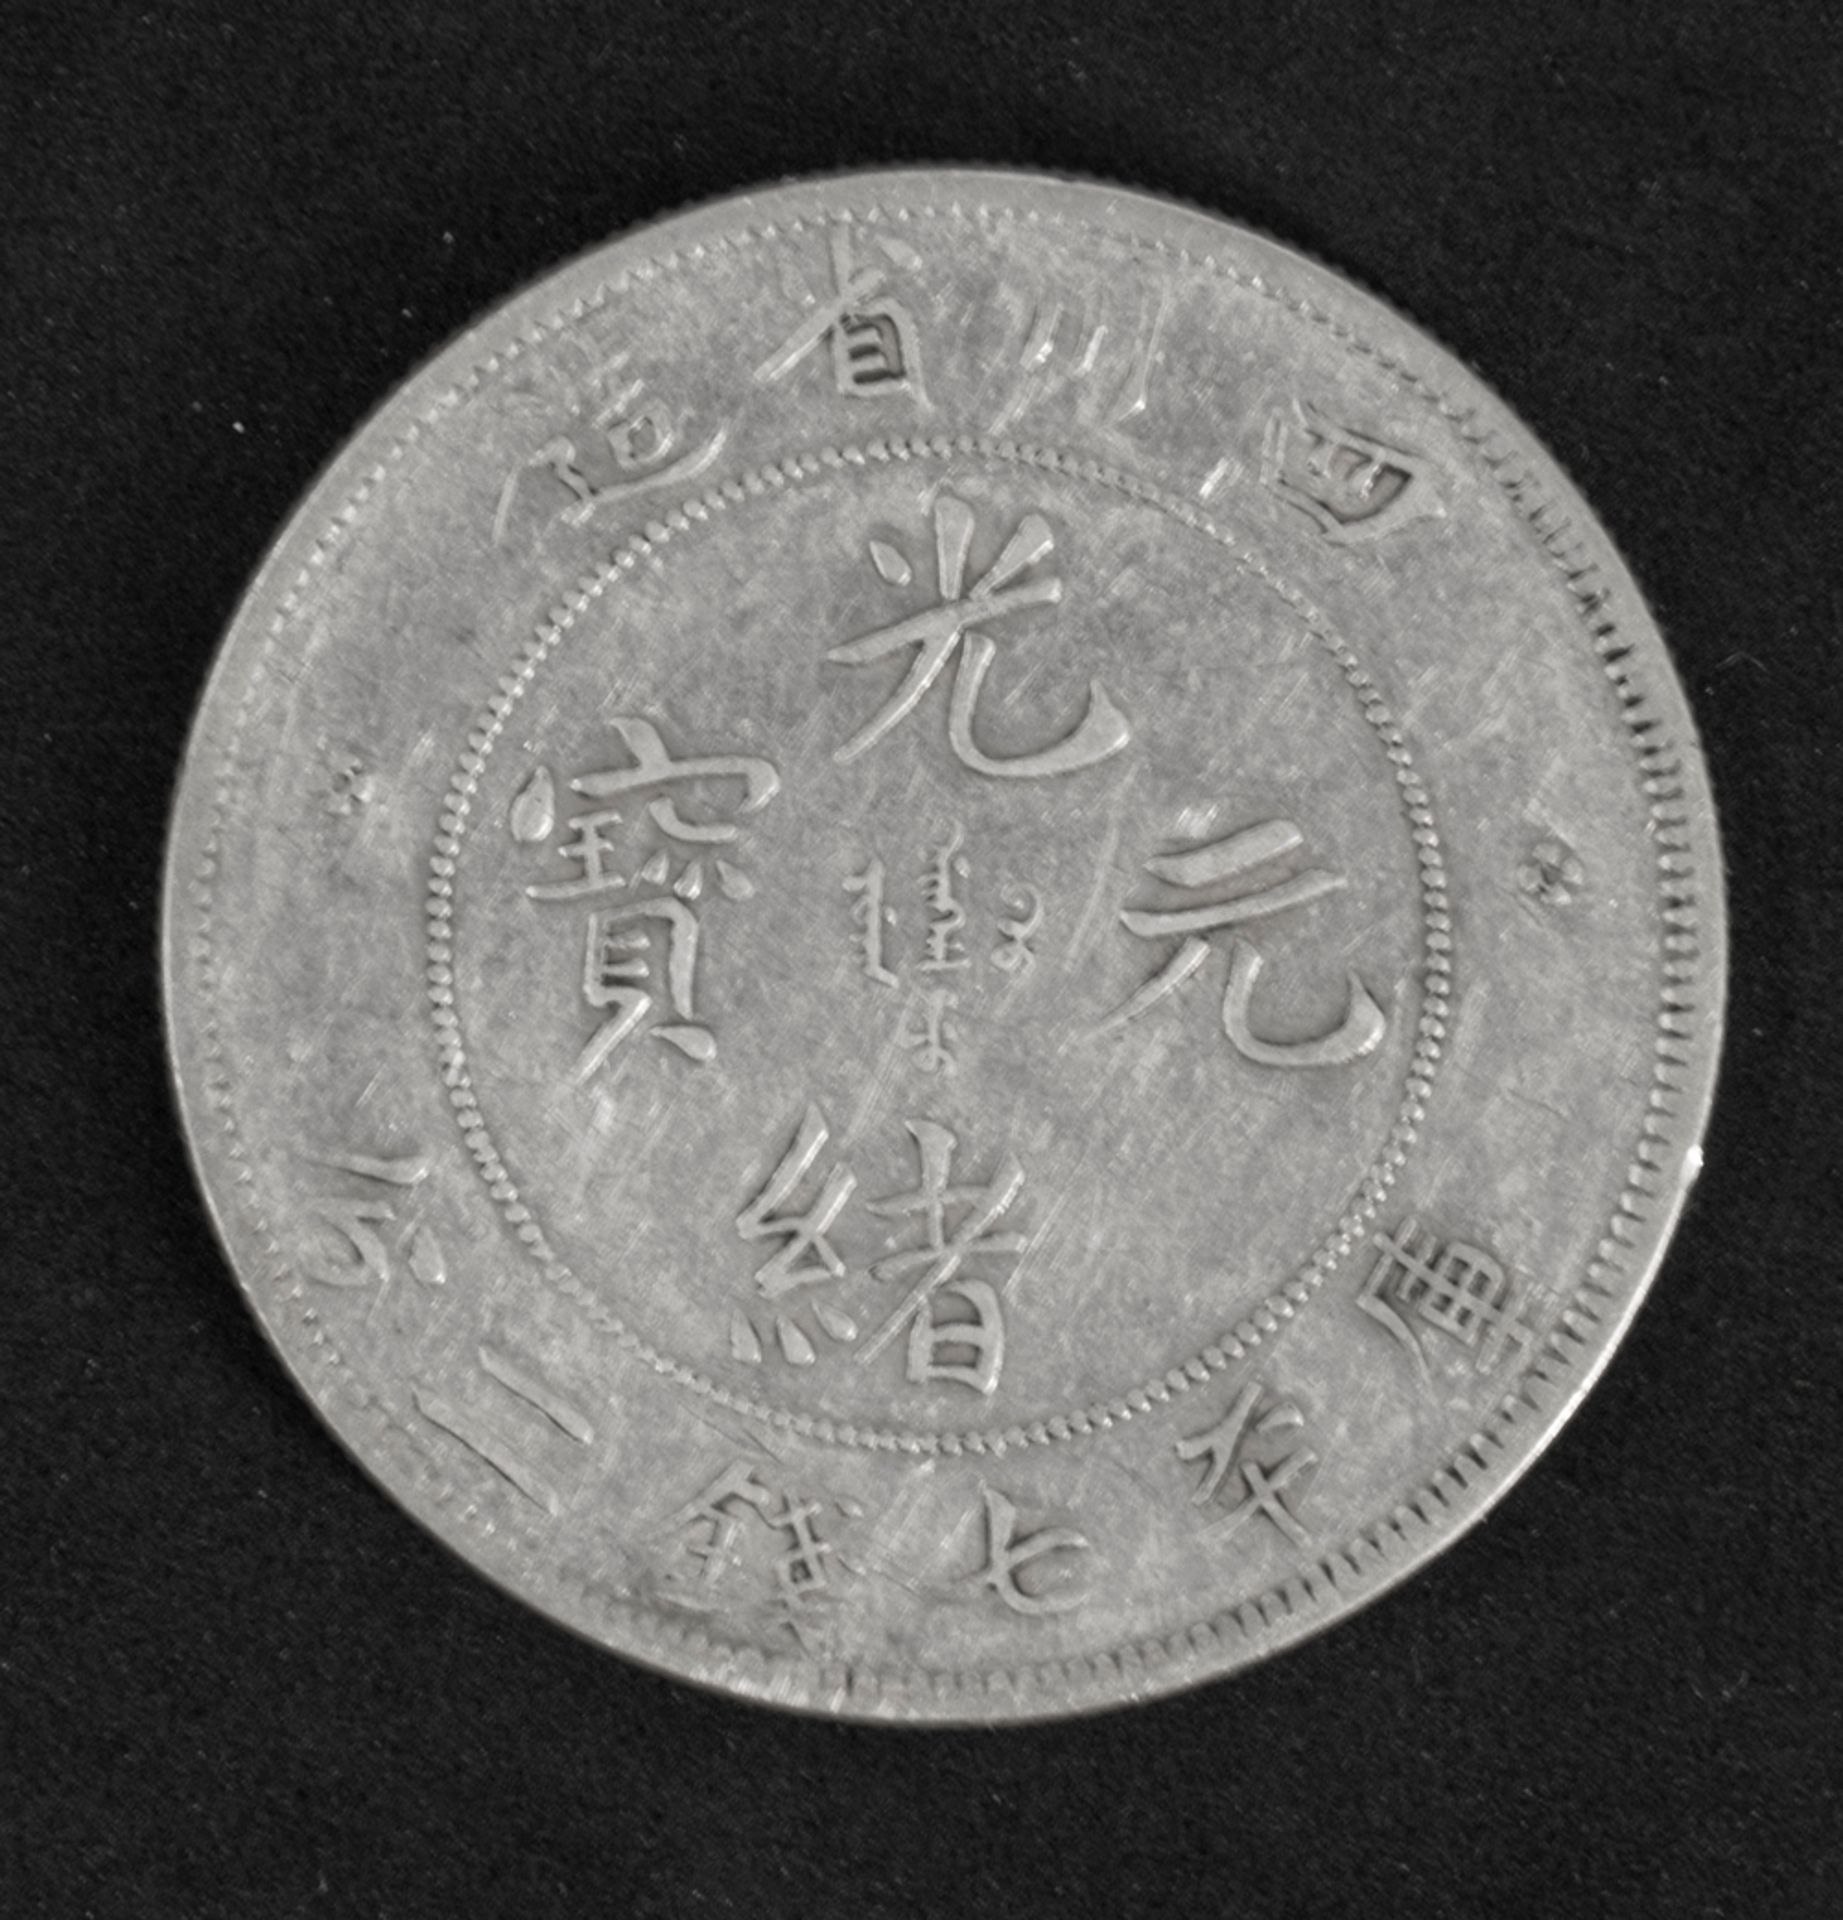 China Provinz Szechuen 1898/1908, 1 Dollar - Silbermünze. Durchmesser: ca. 39 mm. Gewicht: a. 26,7 - Bild 2 aus 2